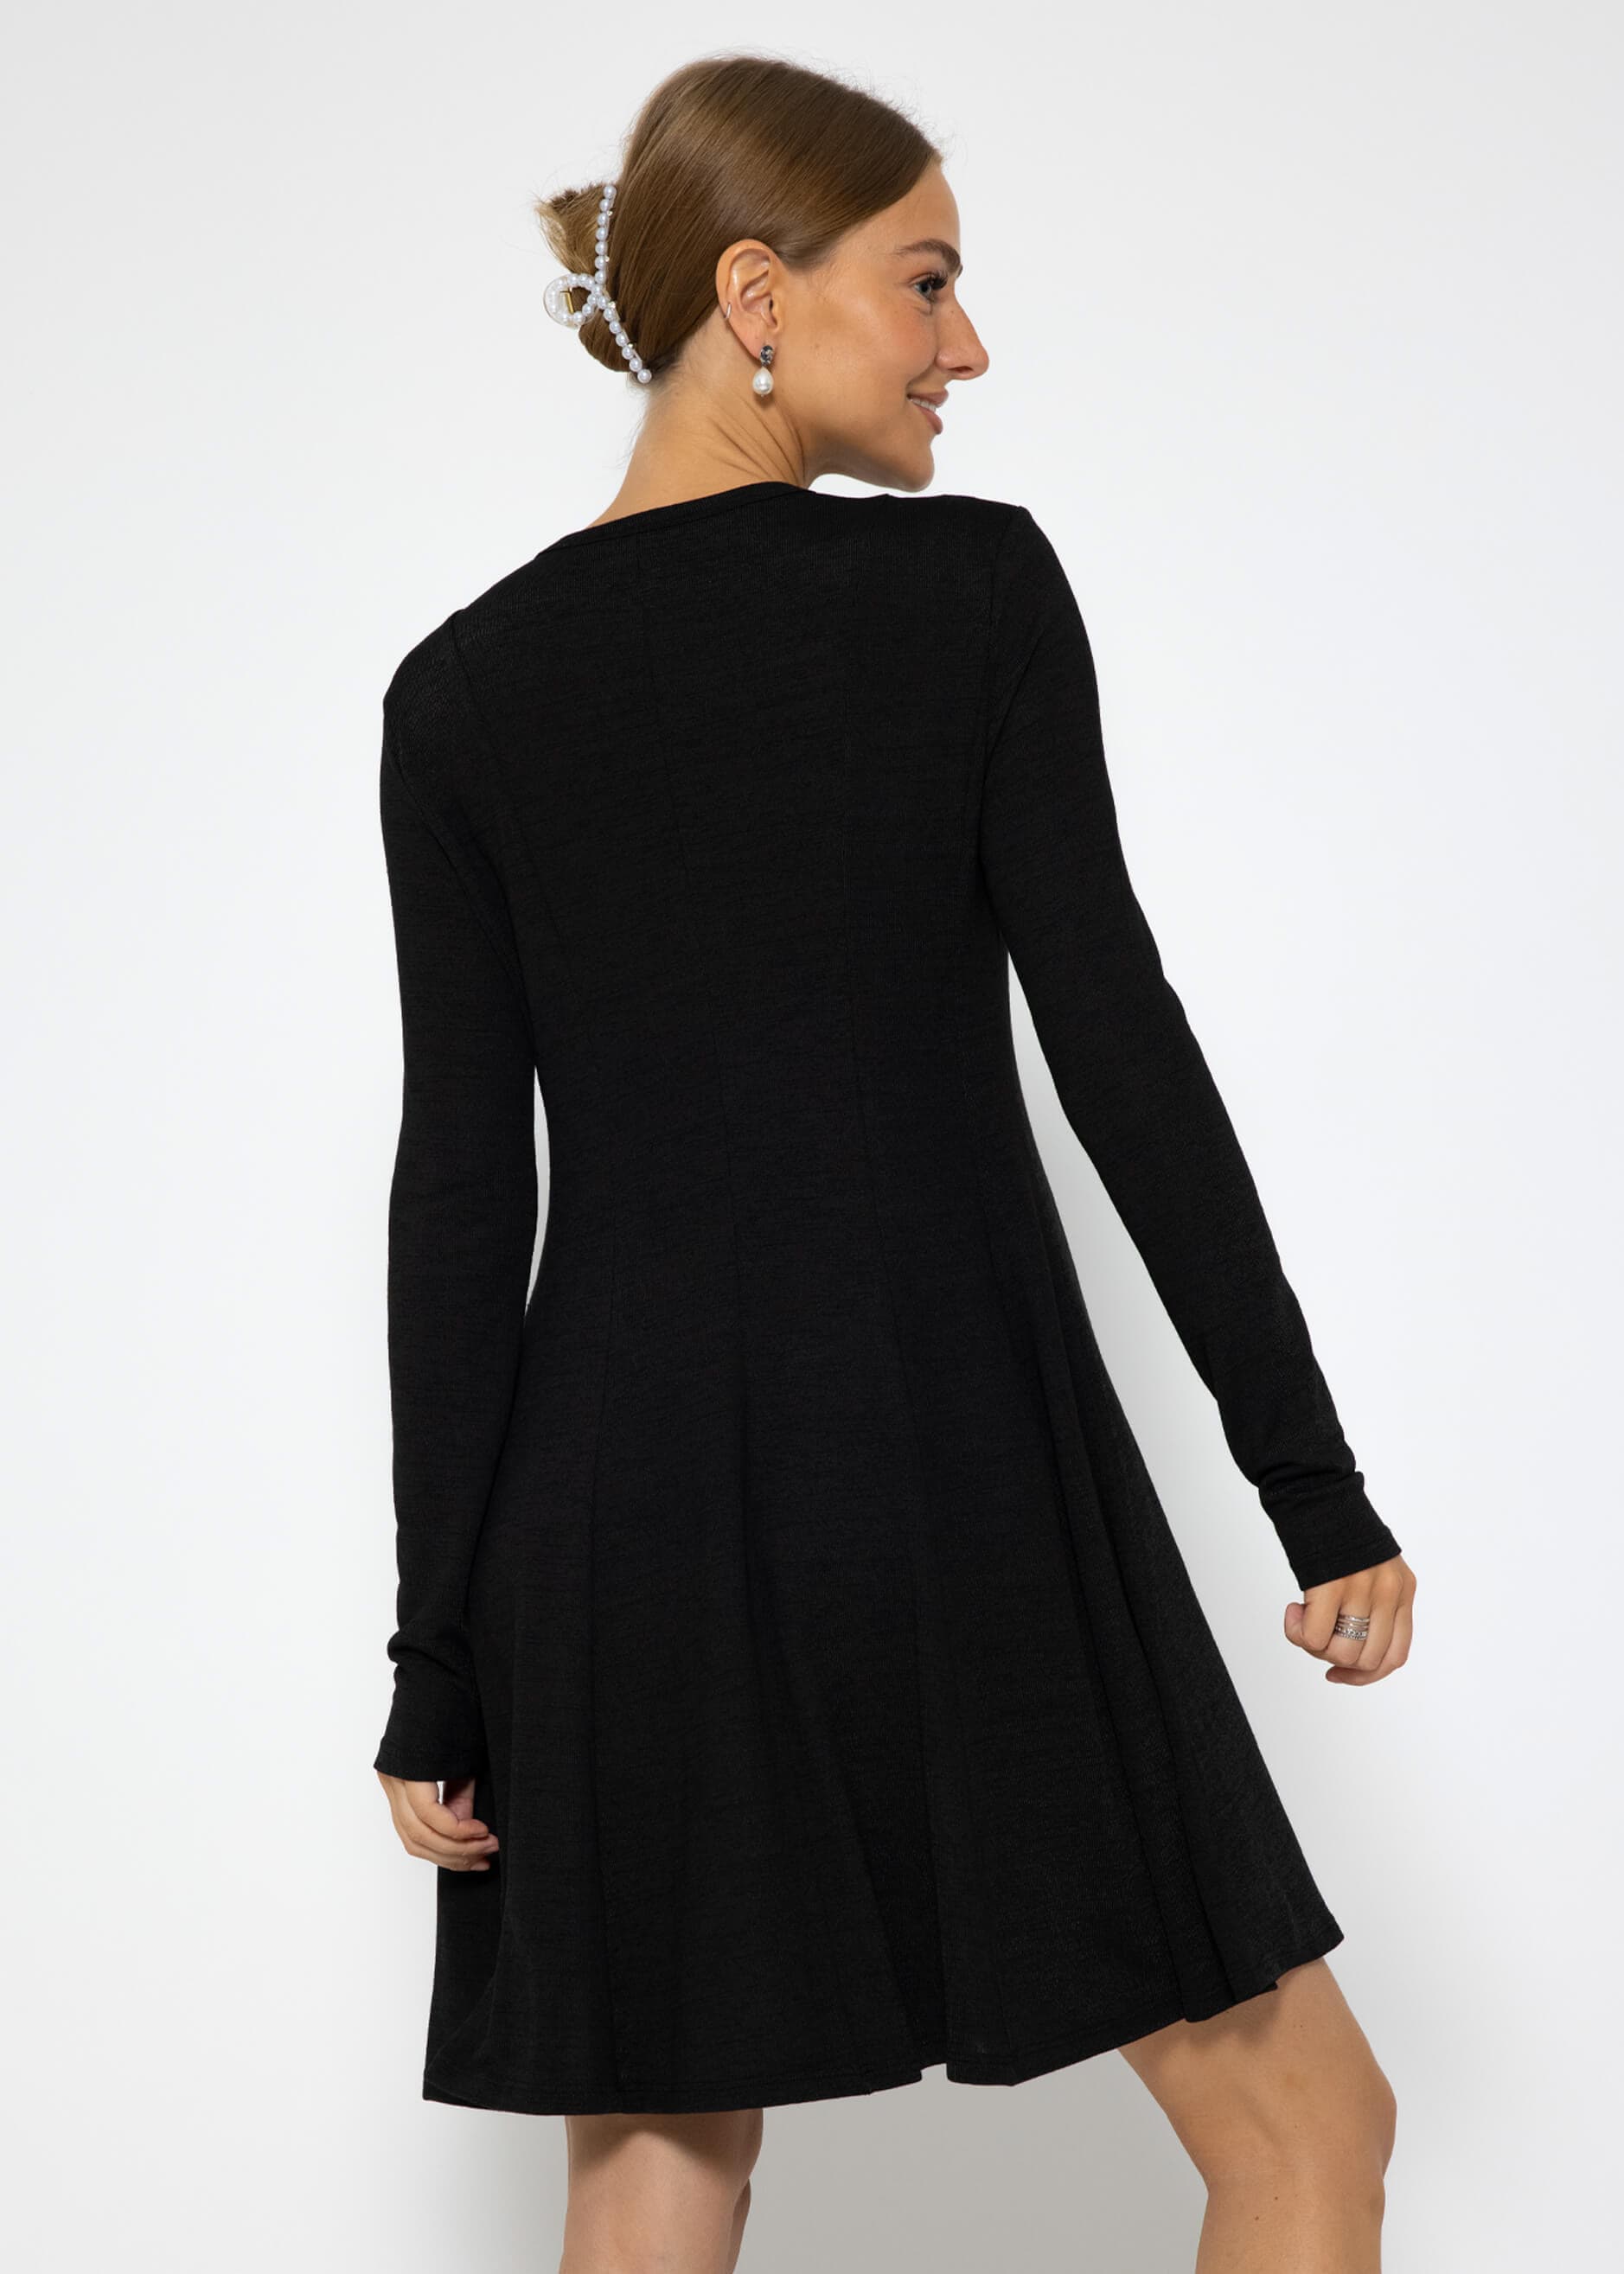 Bekleidung | schwarz - Langarm Jerseykleid SASSYCLASSY | | Kleider